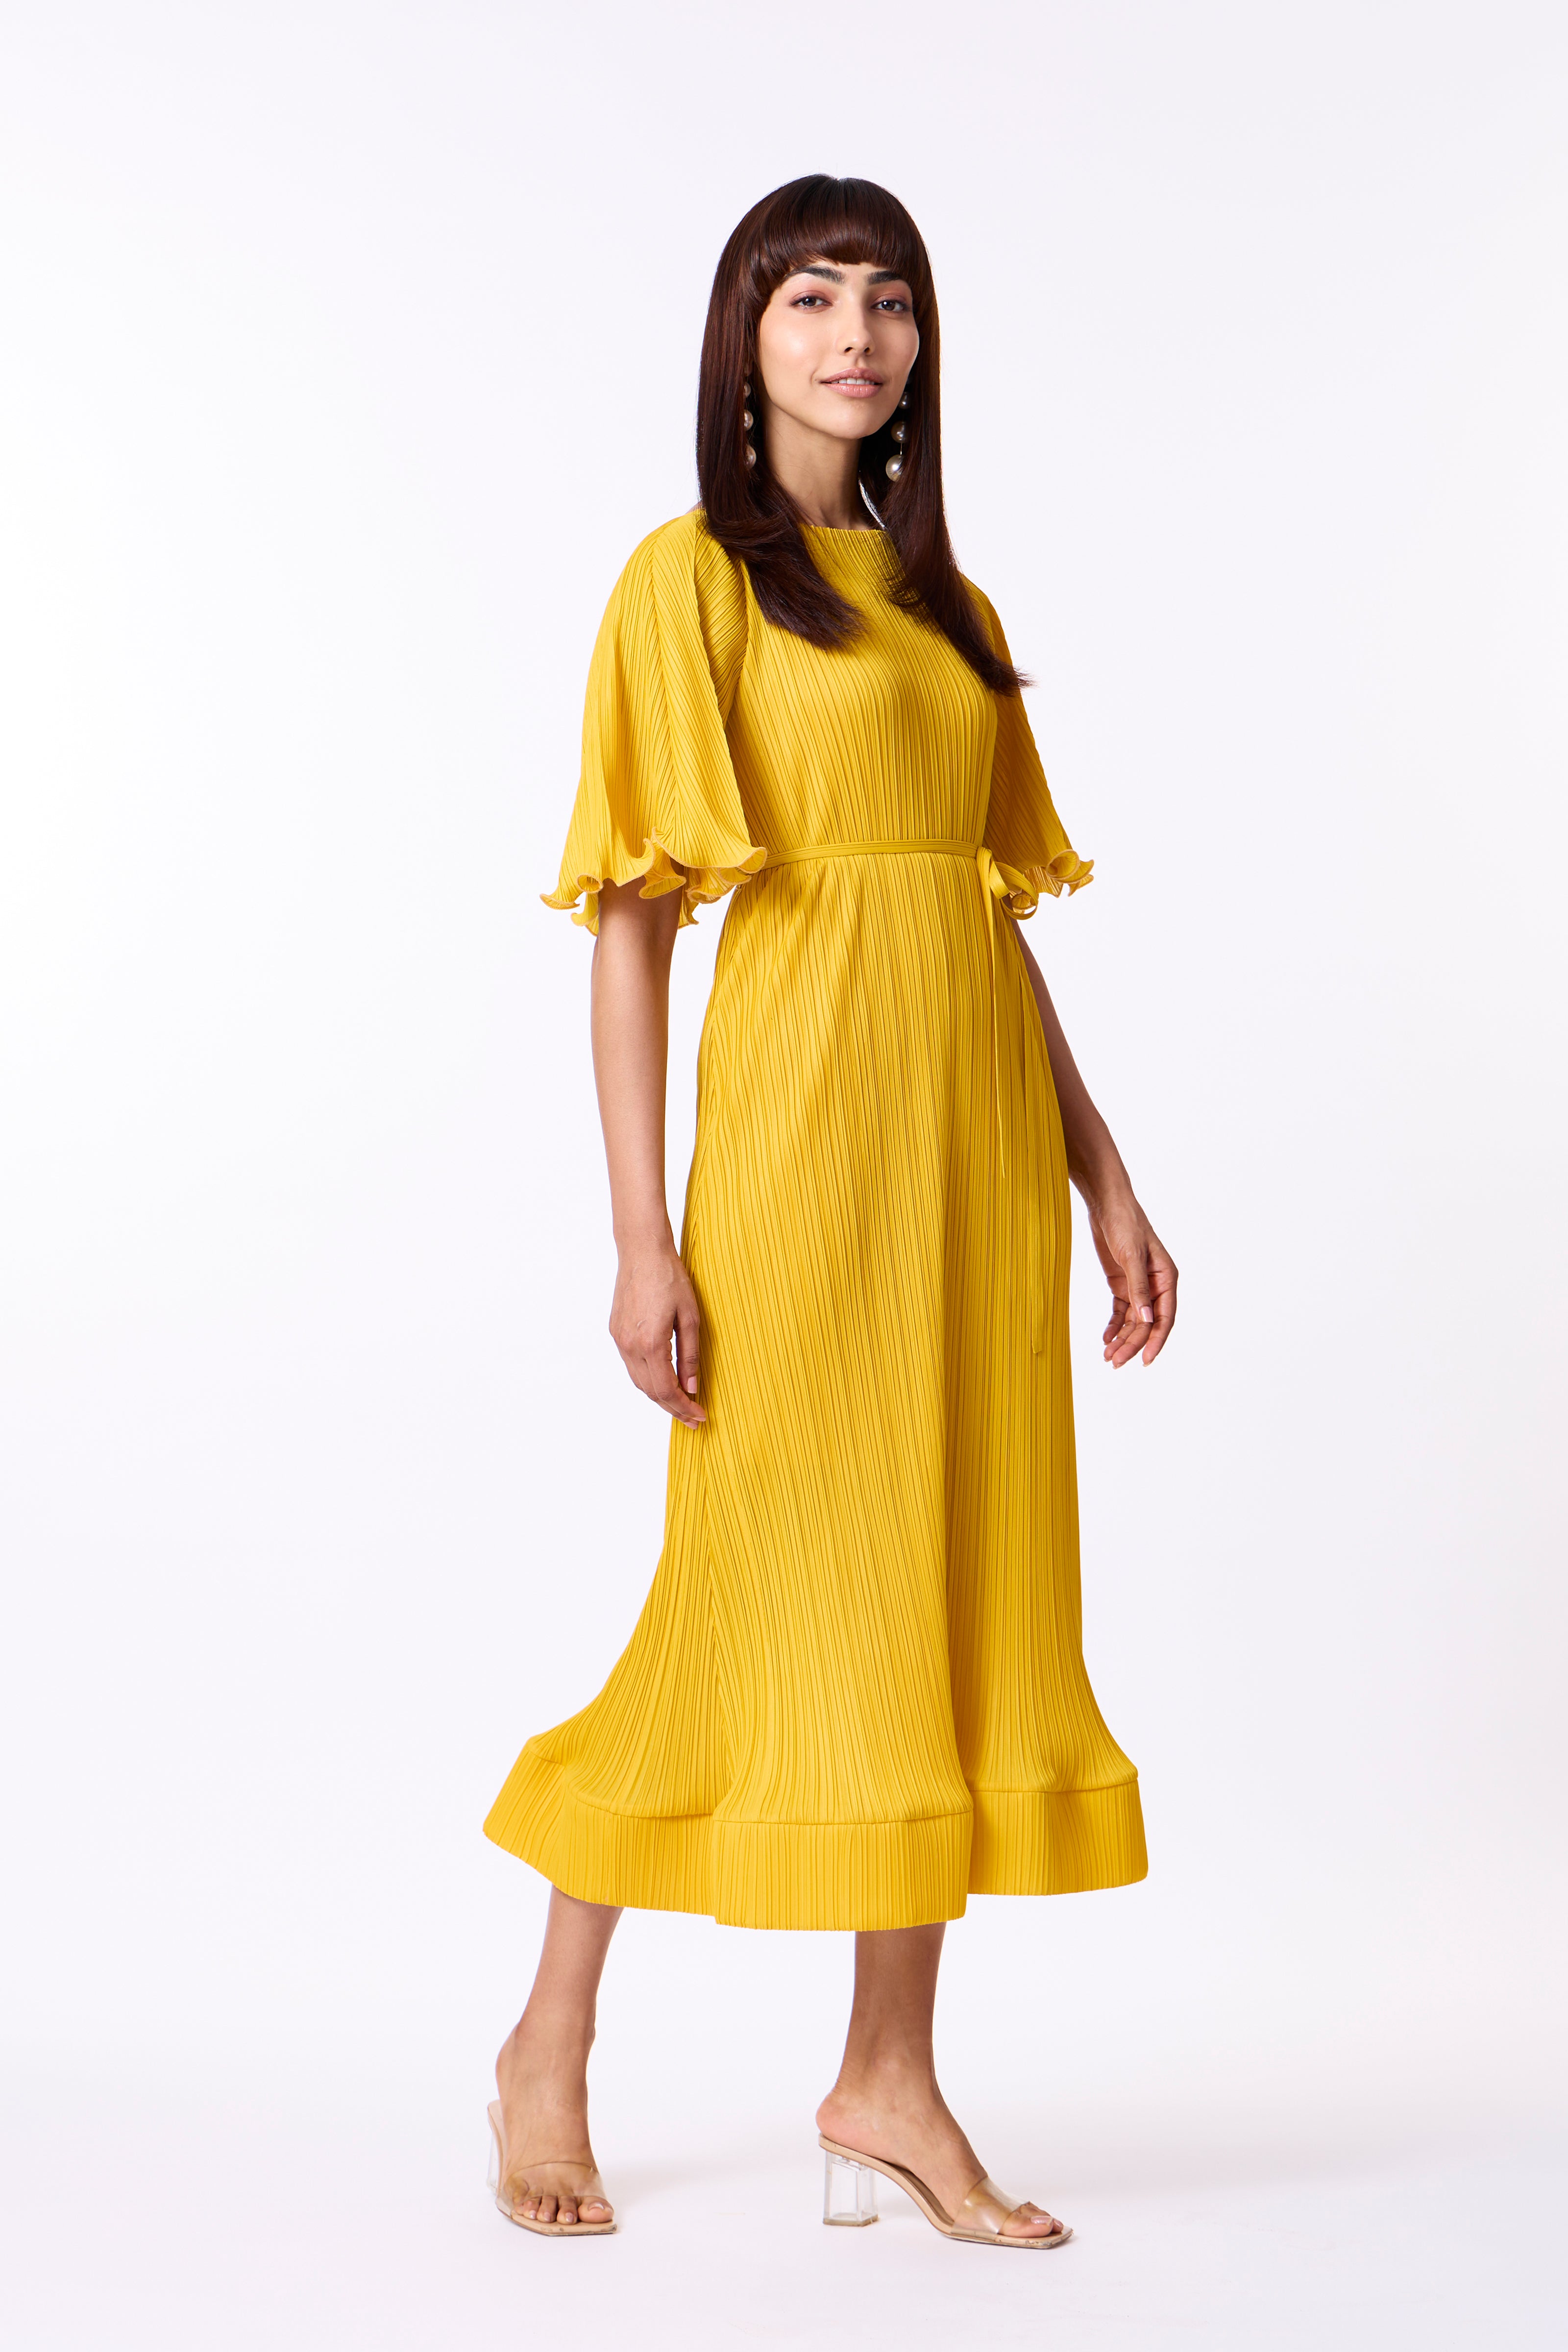 Celestine Dress - Yellow